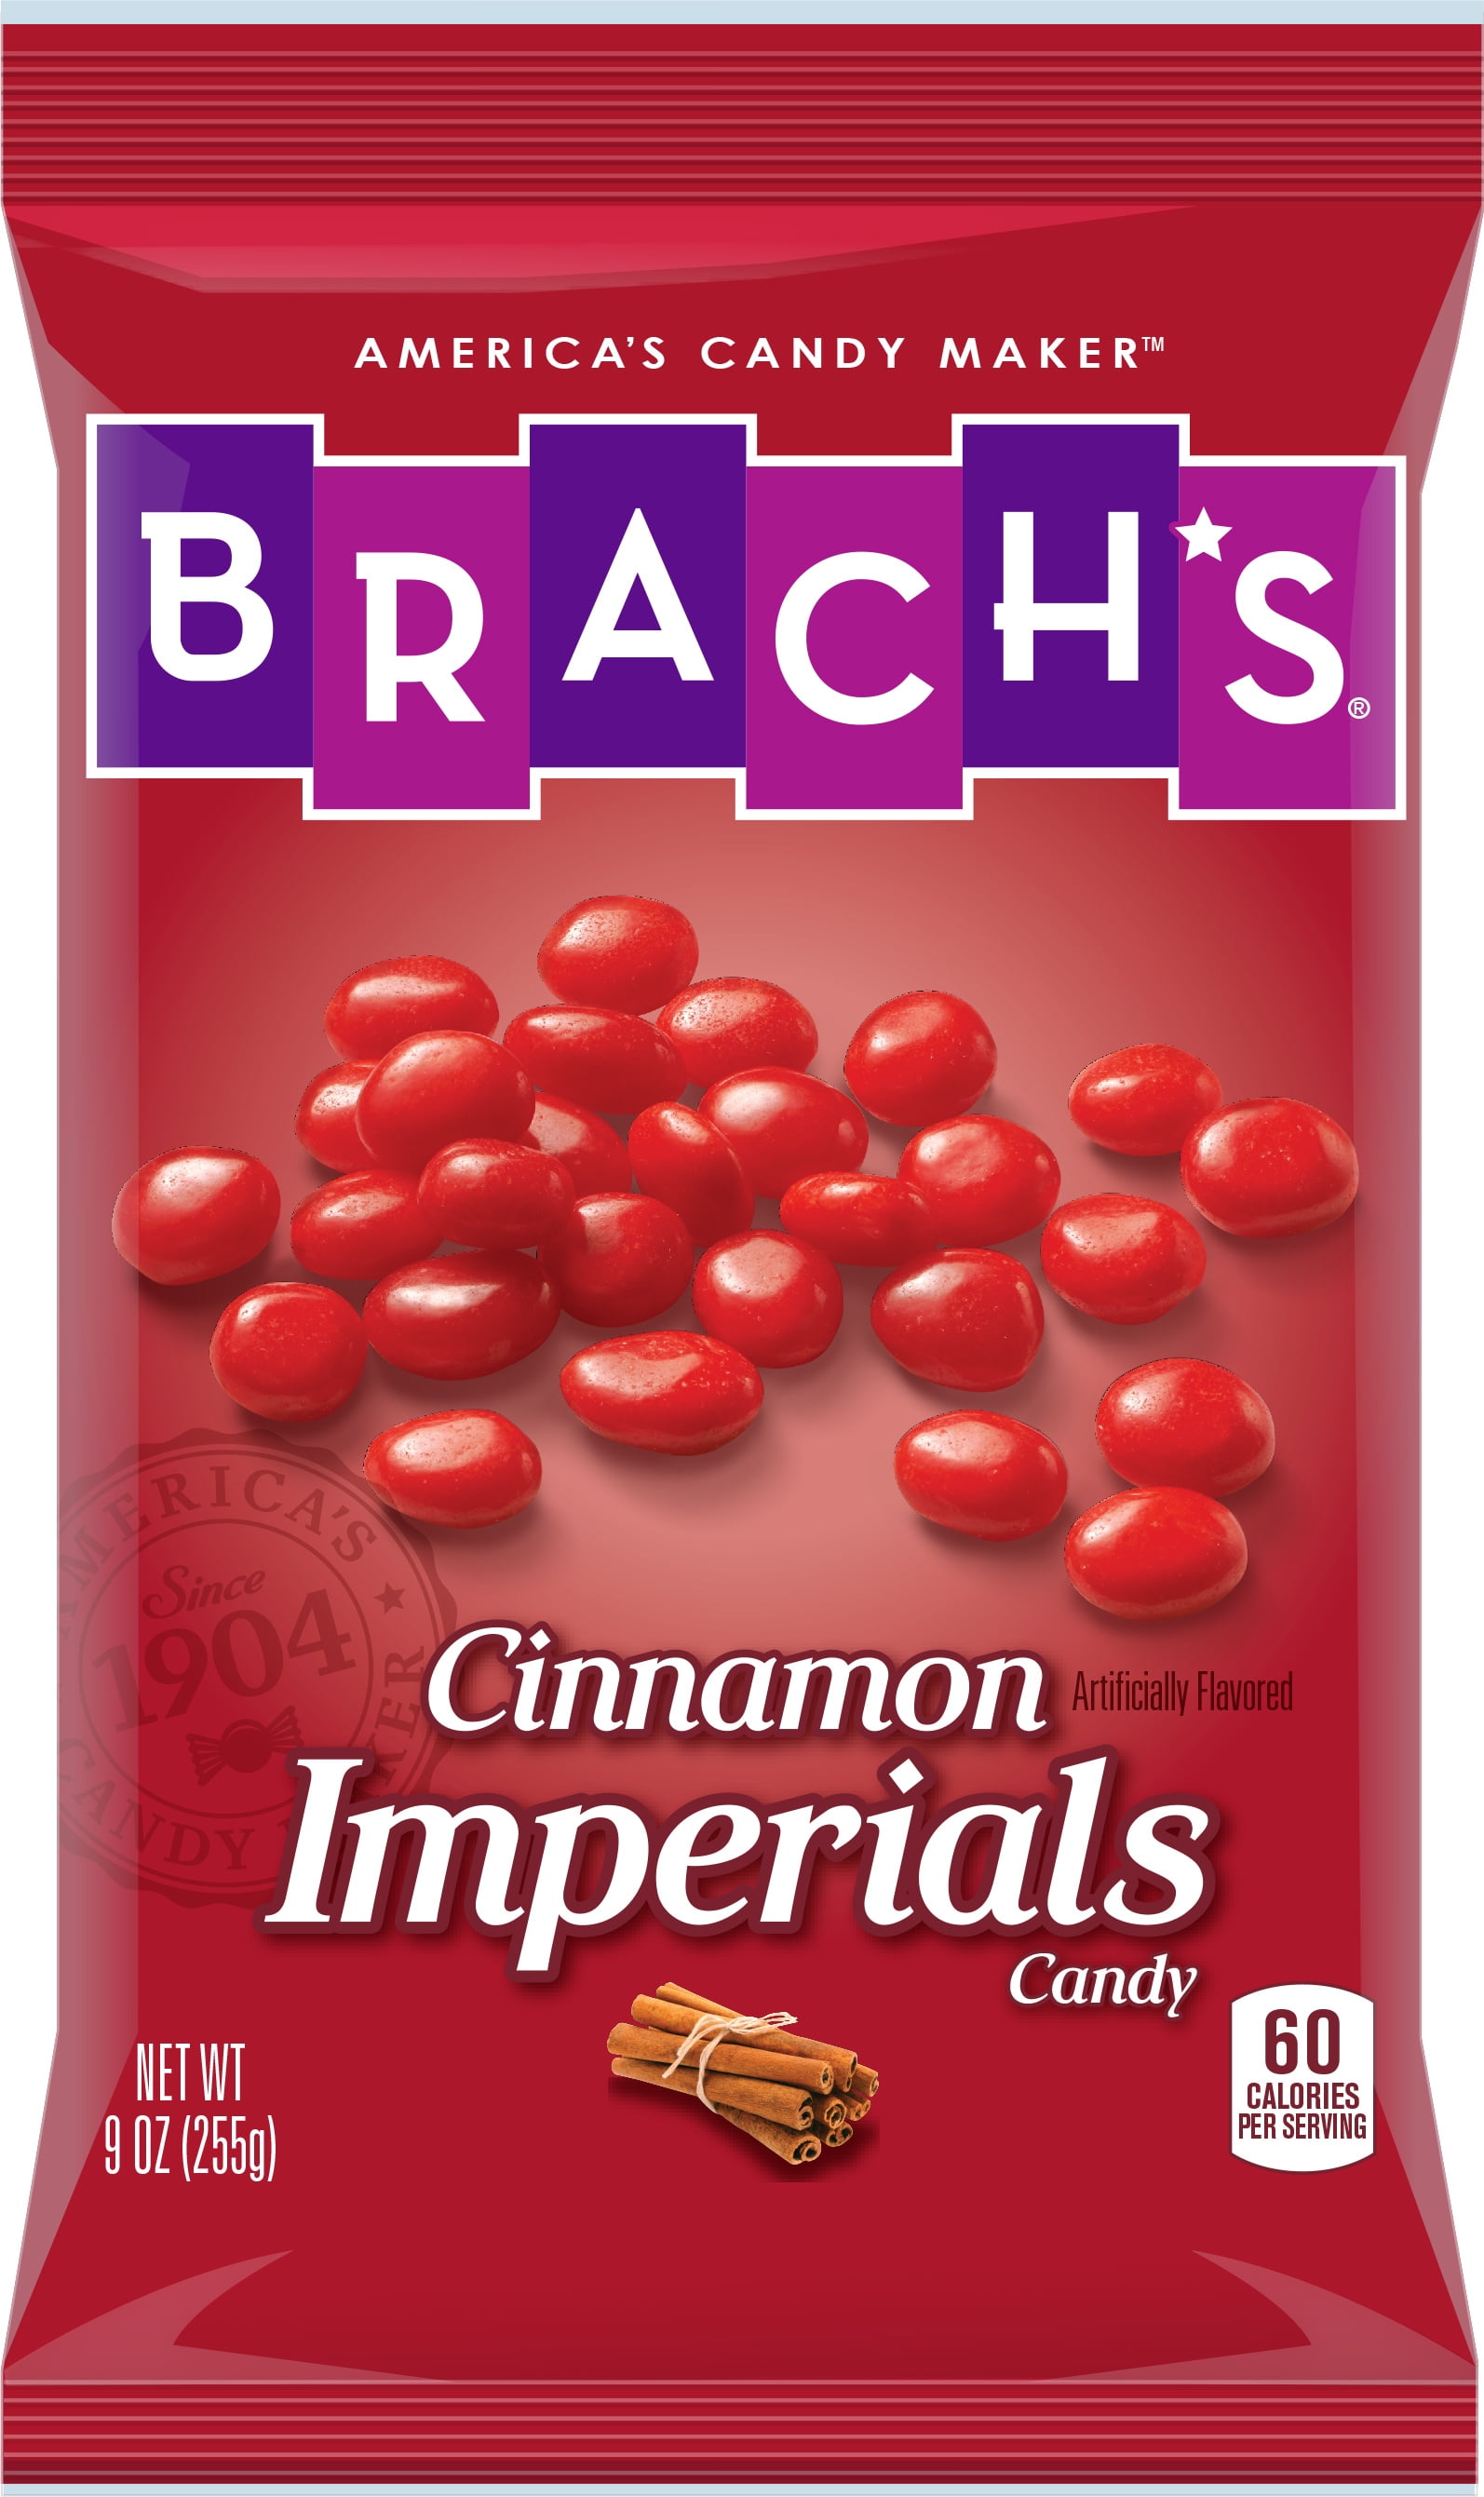 Buy Brach's, Cinnamon Imperials Hard Candy, 9 Oz at Walmart.com.